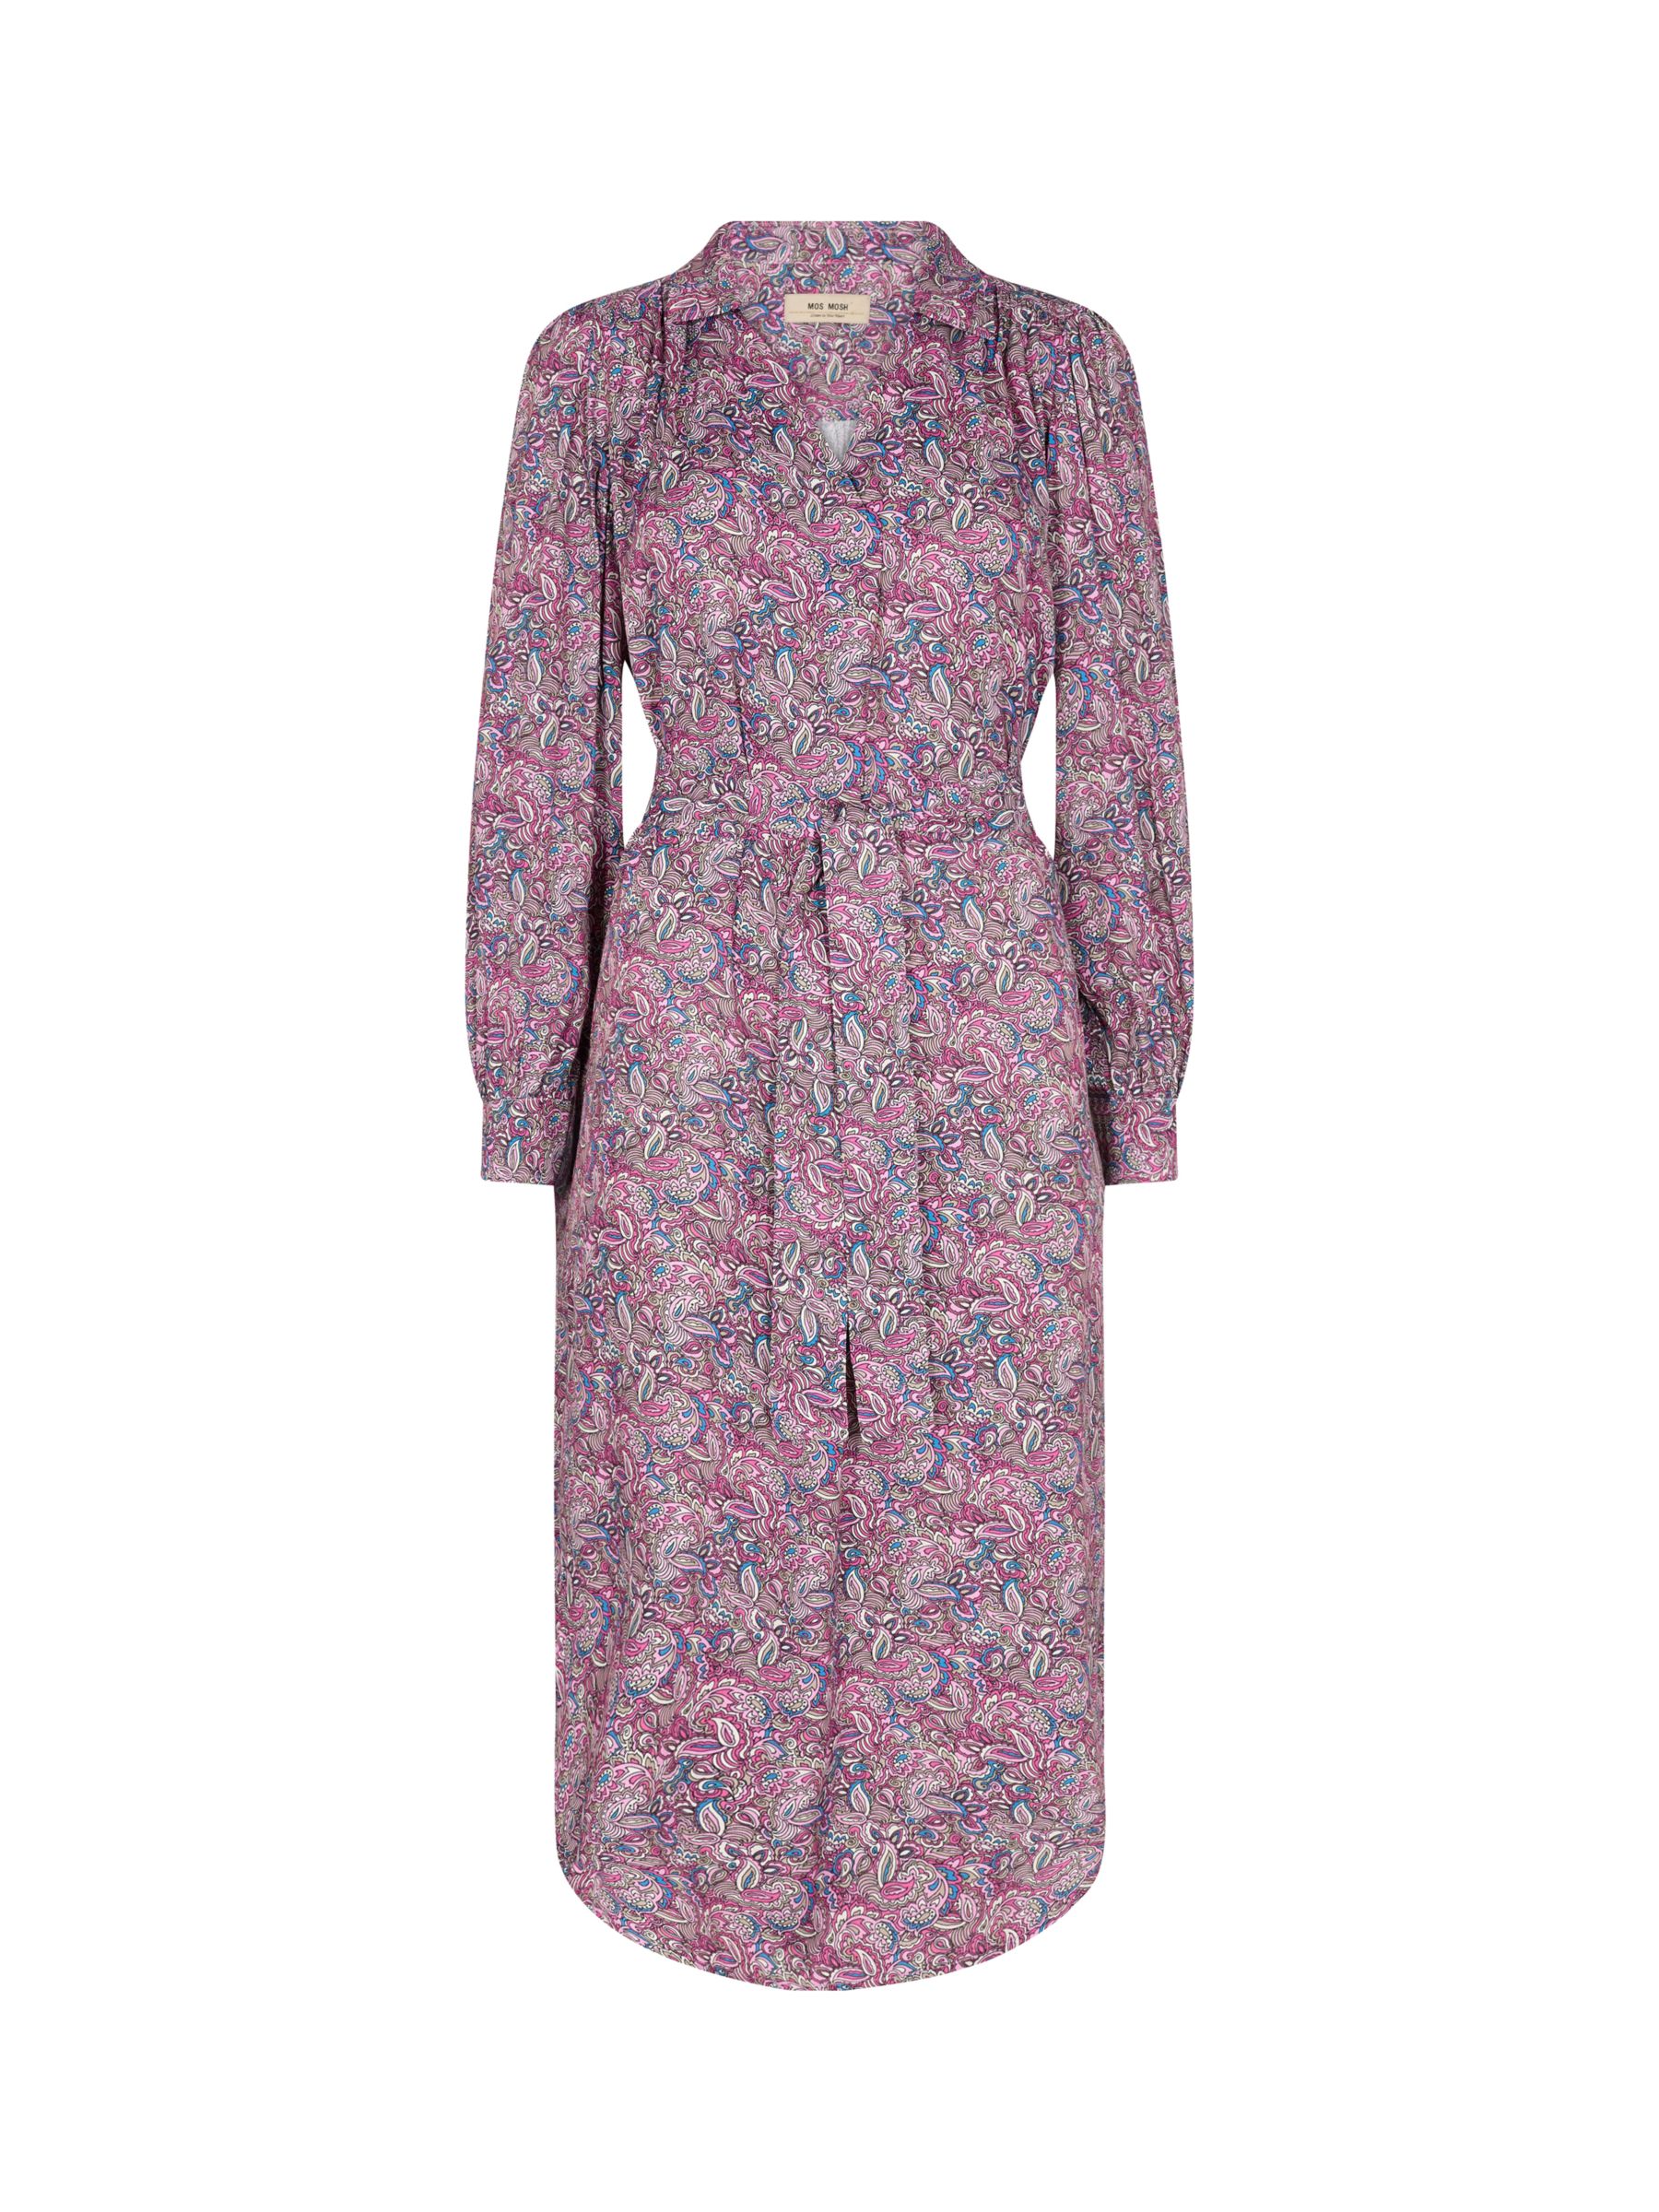 MOS MOSH Aldo Flower Paisley Print Dress, Lilac Sachet at John Lewis ...